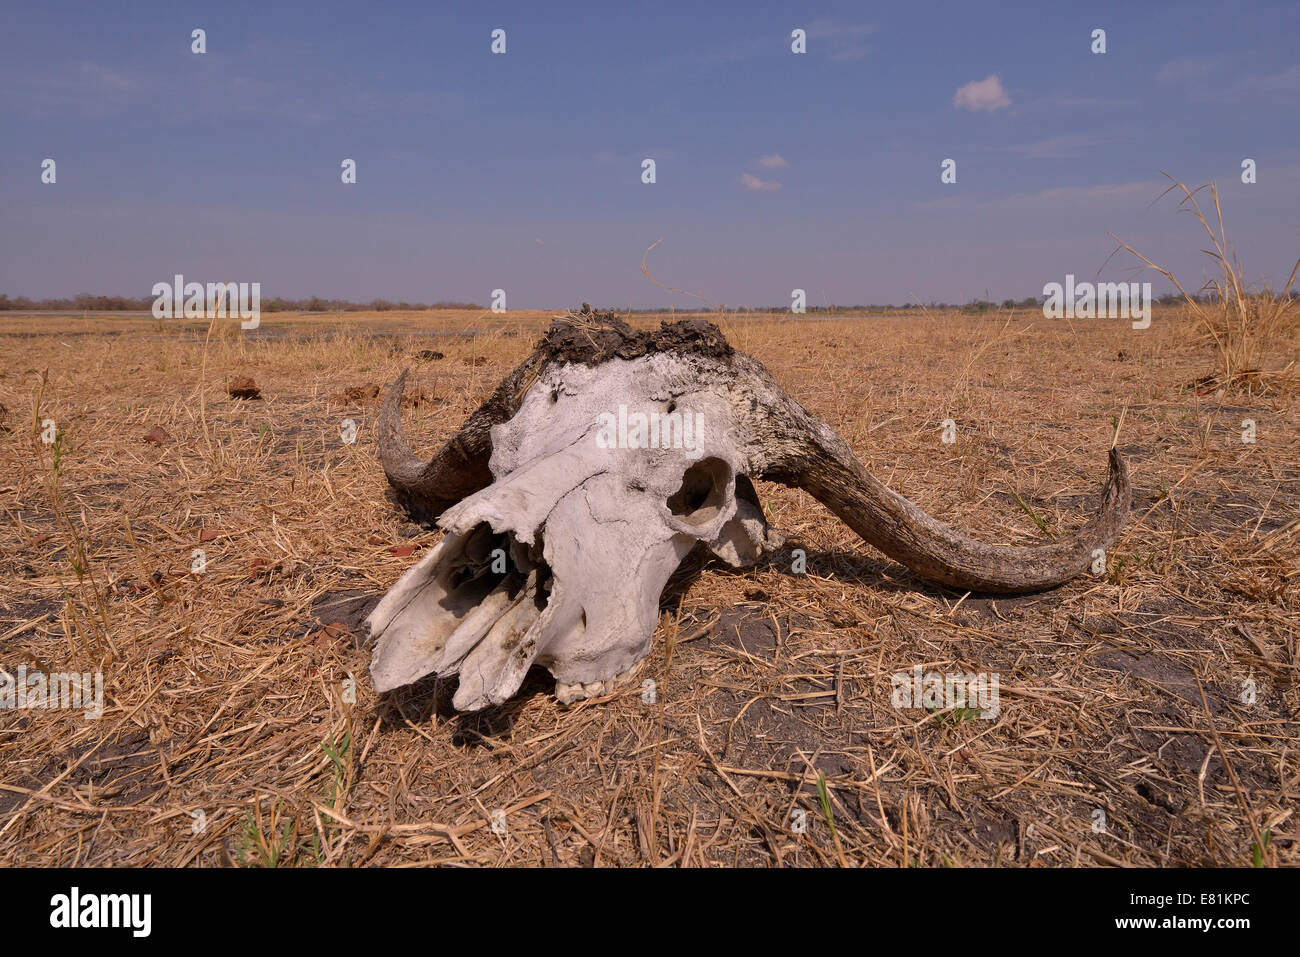 El cráneo de un búfalo del Cabo (Syncerus caffer), sector Nsefu, South Luangwa National Park, Zambia Foto de stock